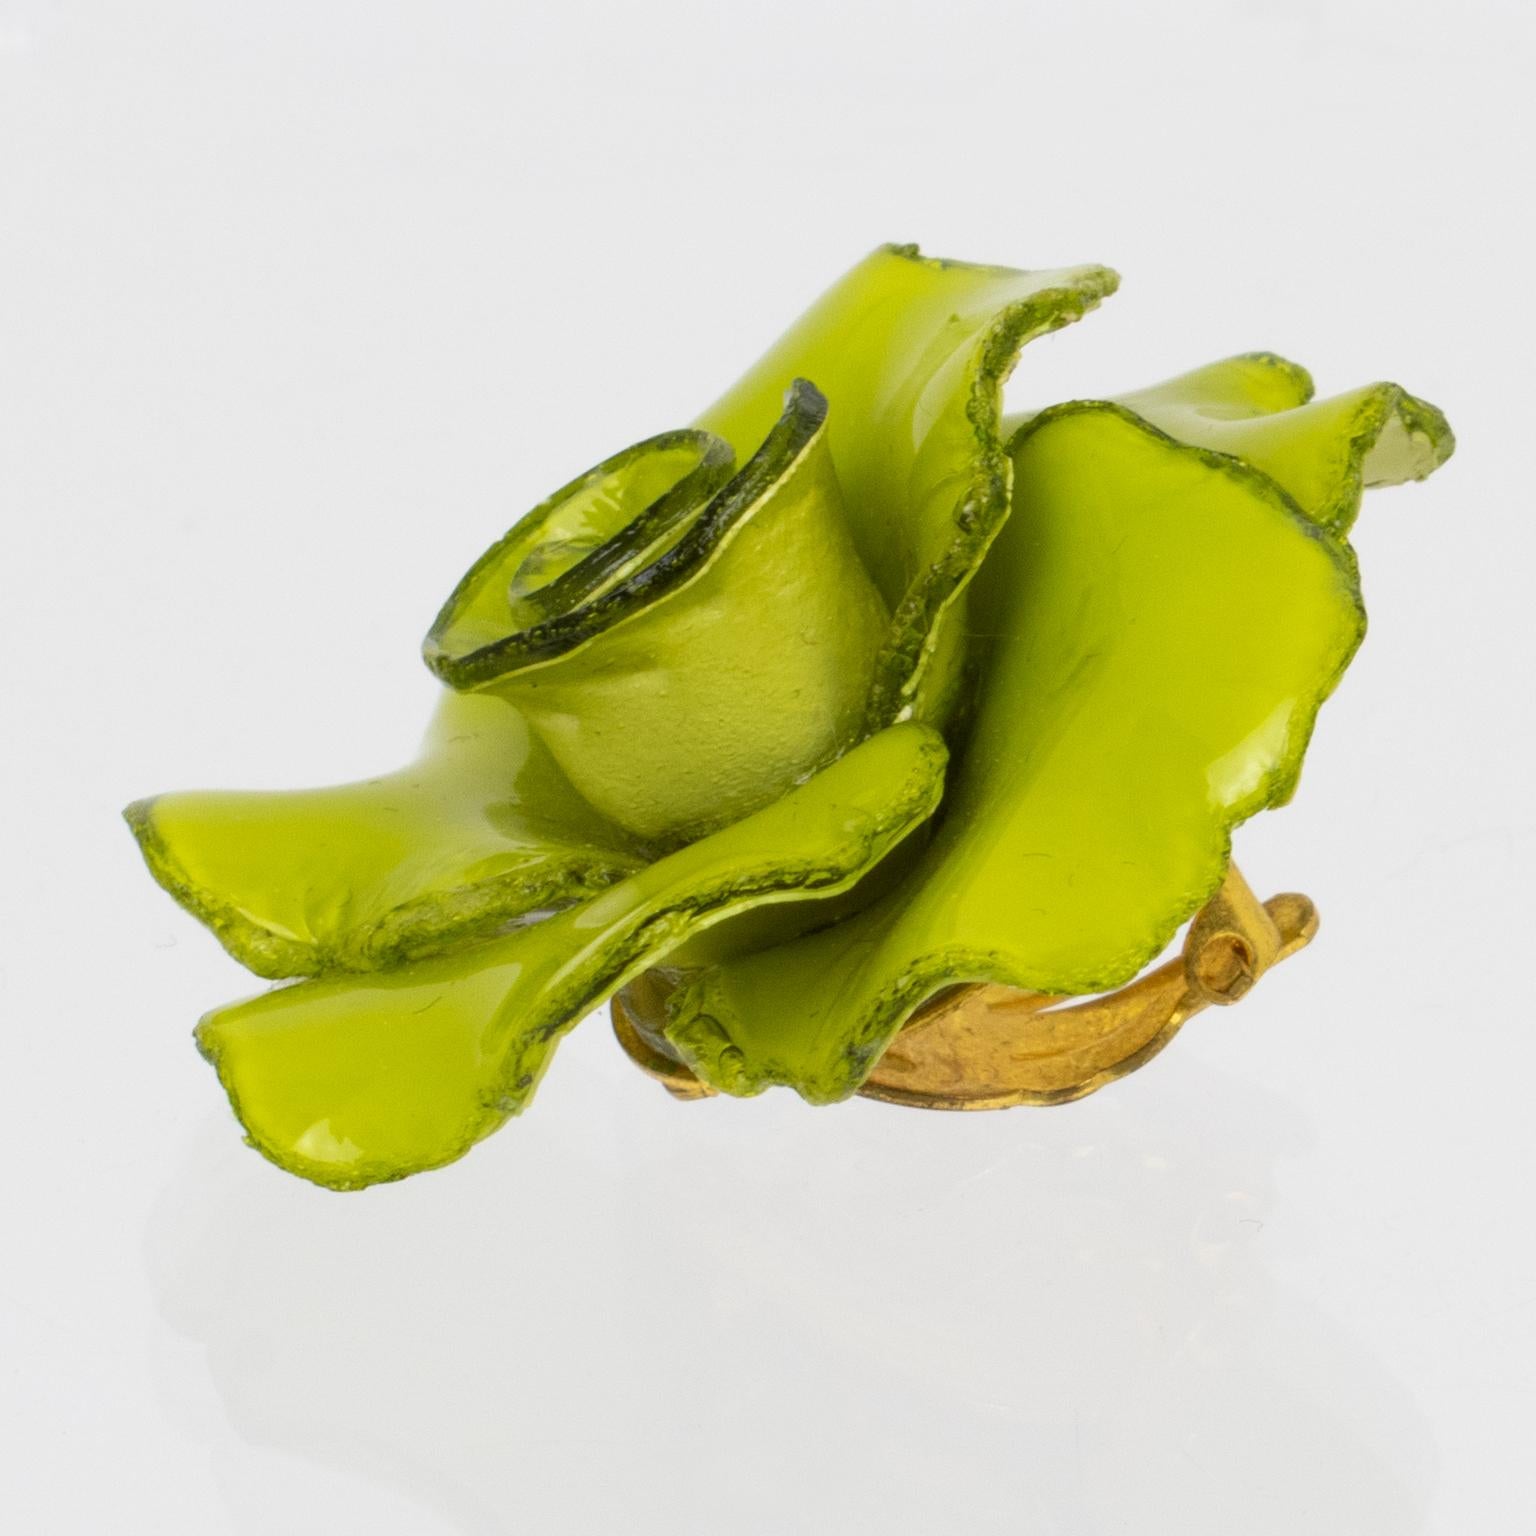 Women's Francoise Montague Paris by Cilea Clip Earrings Resin Avocado Green Rose For Sale